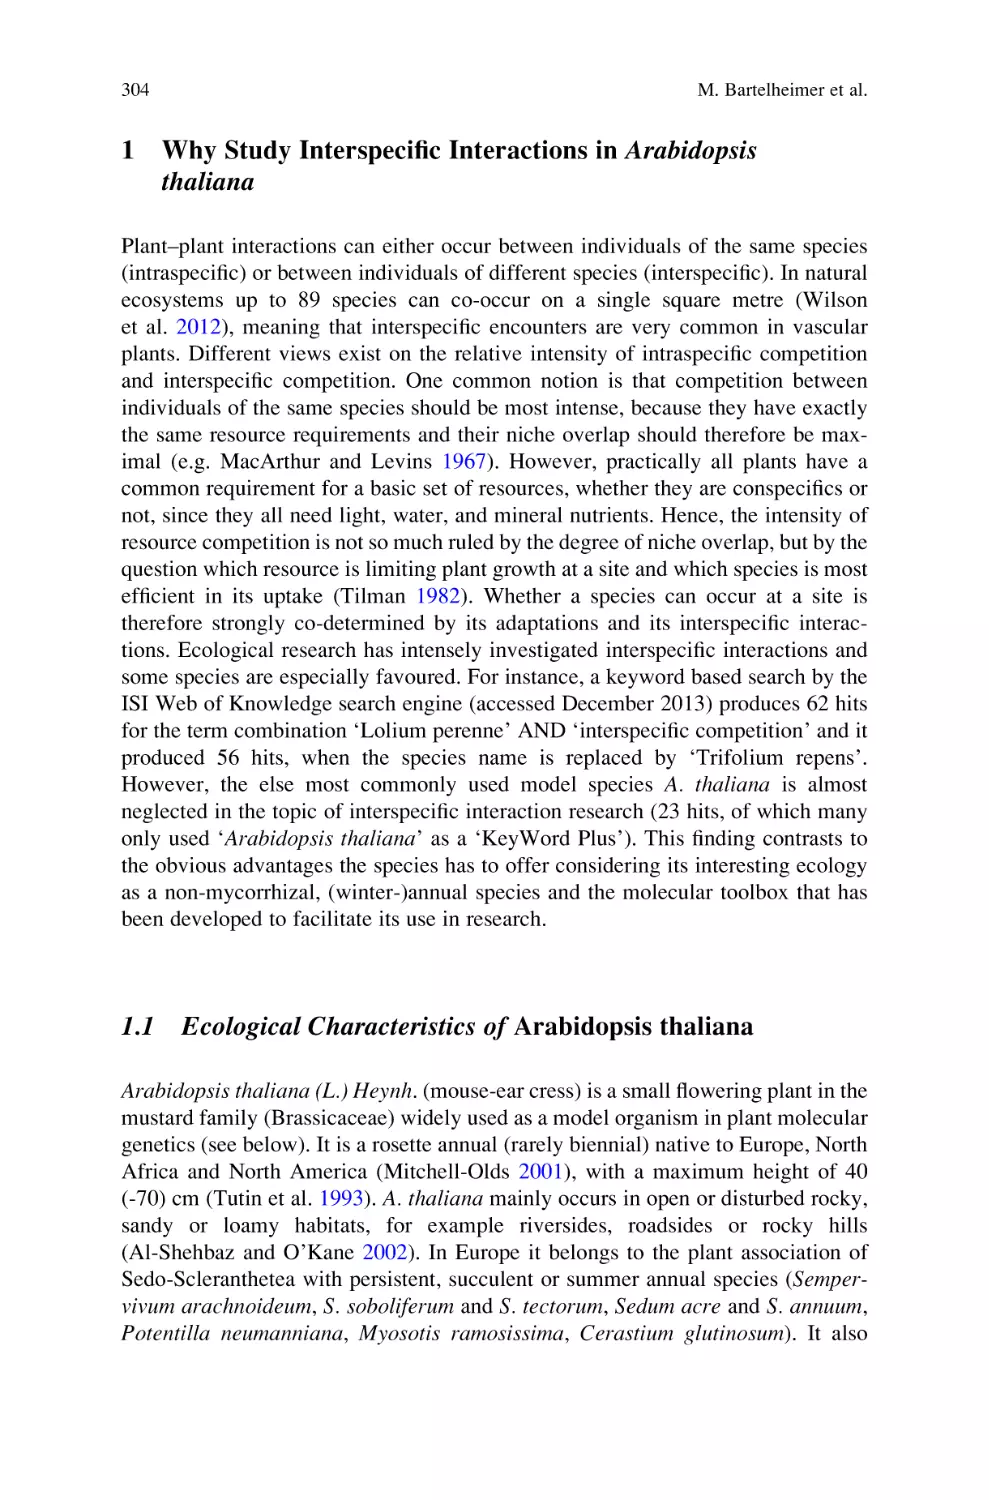 1 Why Study Interspecific Interactions in Arabidopsis thaliana
1.1 Ecological Characteristics of Arabidopsis thaliana